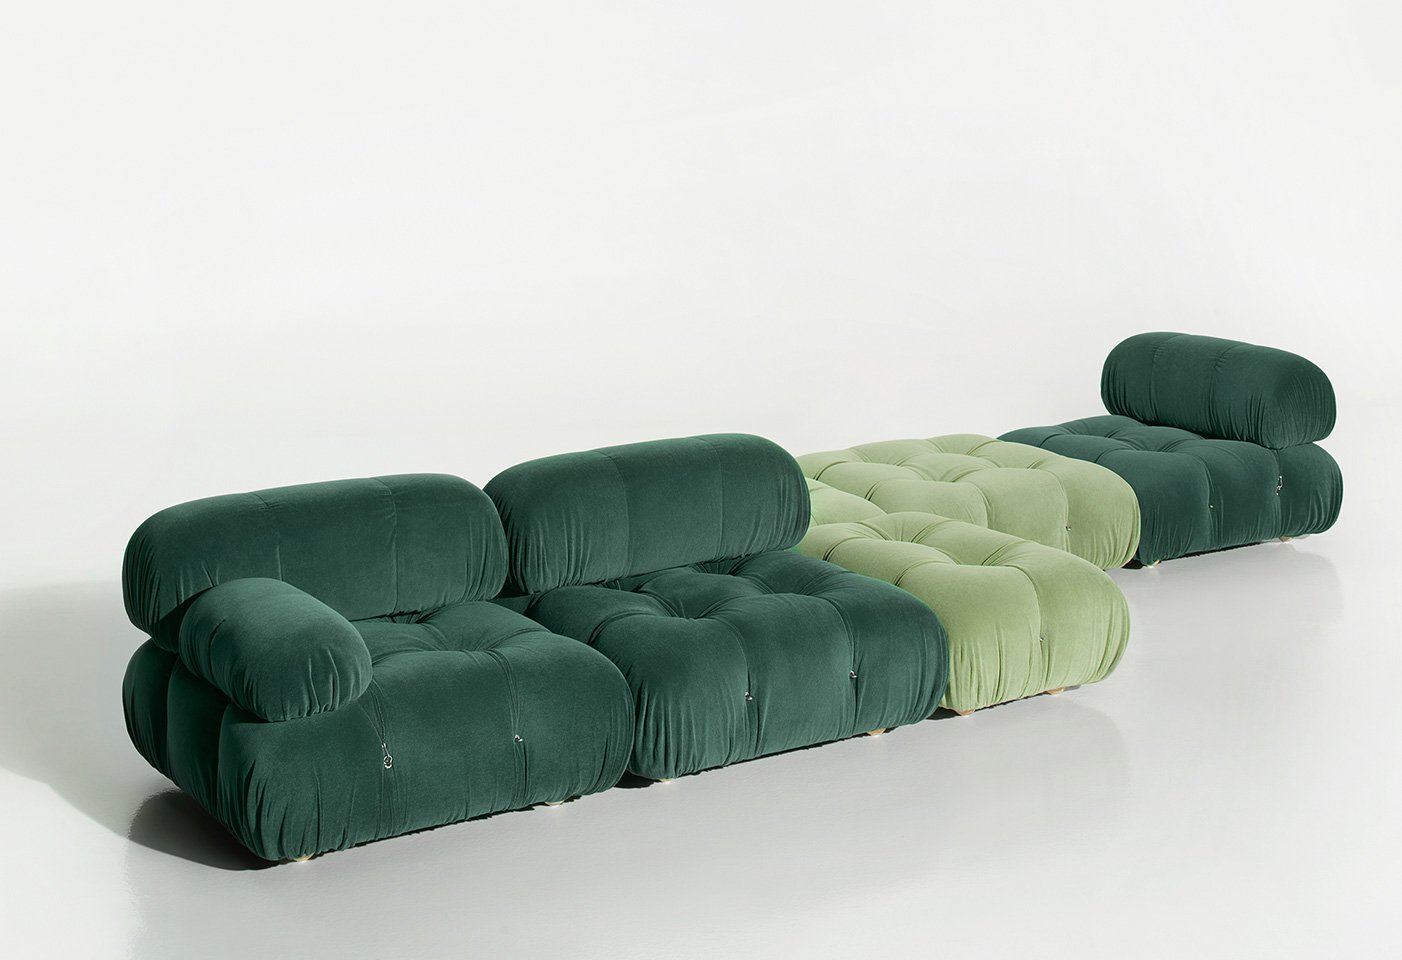 The Camaleonda sofa designed in 1970 by Mario Bellini for B&B Italia. Revisited in 2020, Bellini has made small design tweaks to make the sofa even more comfortable. Photo c/o B&B Italia.